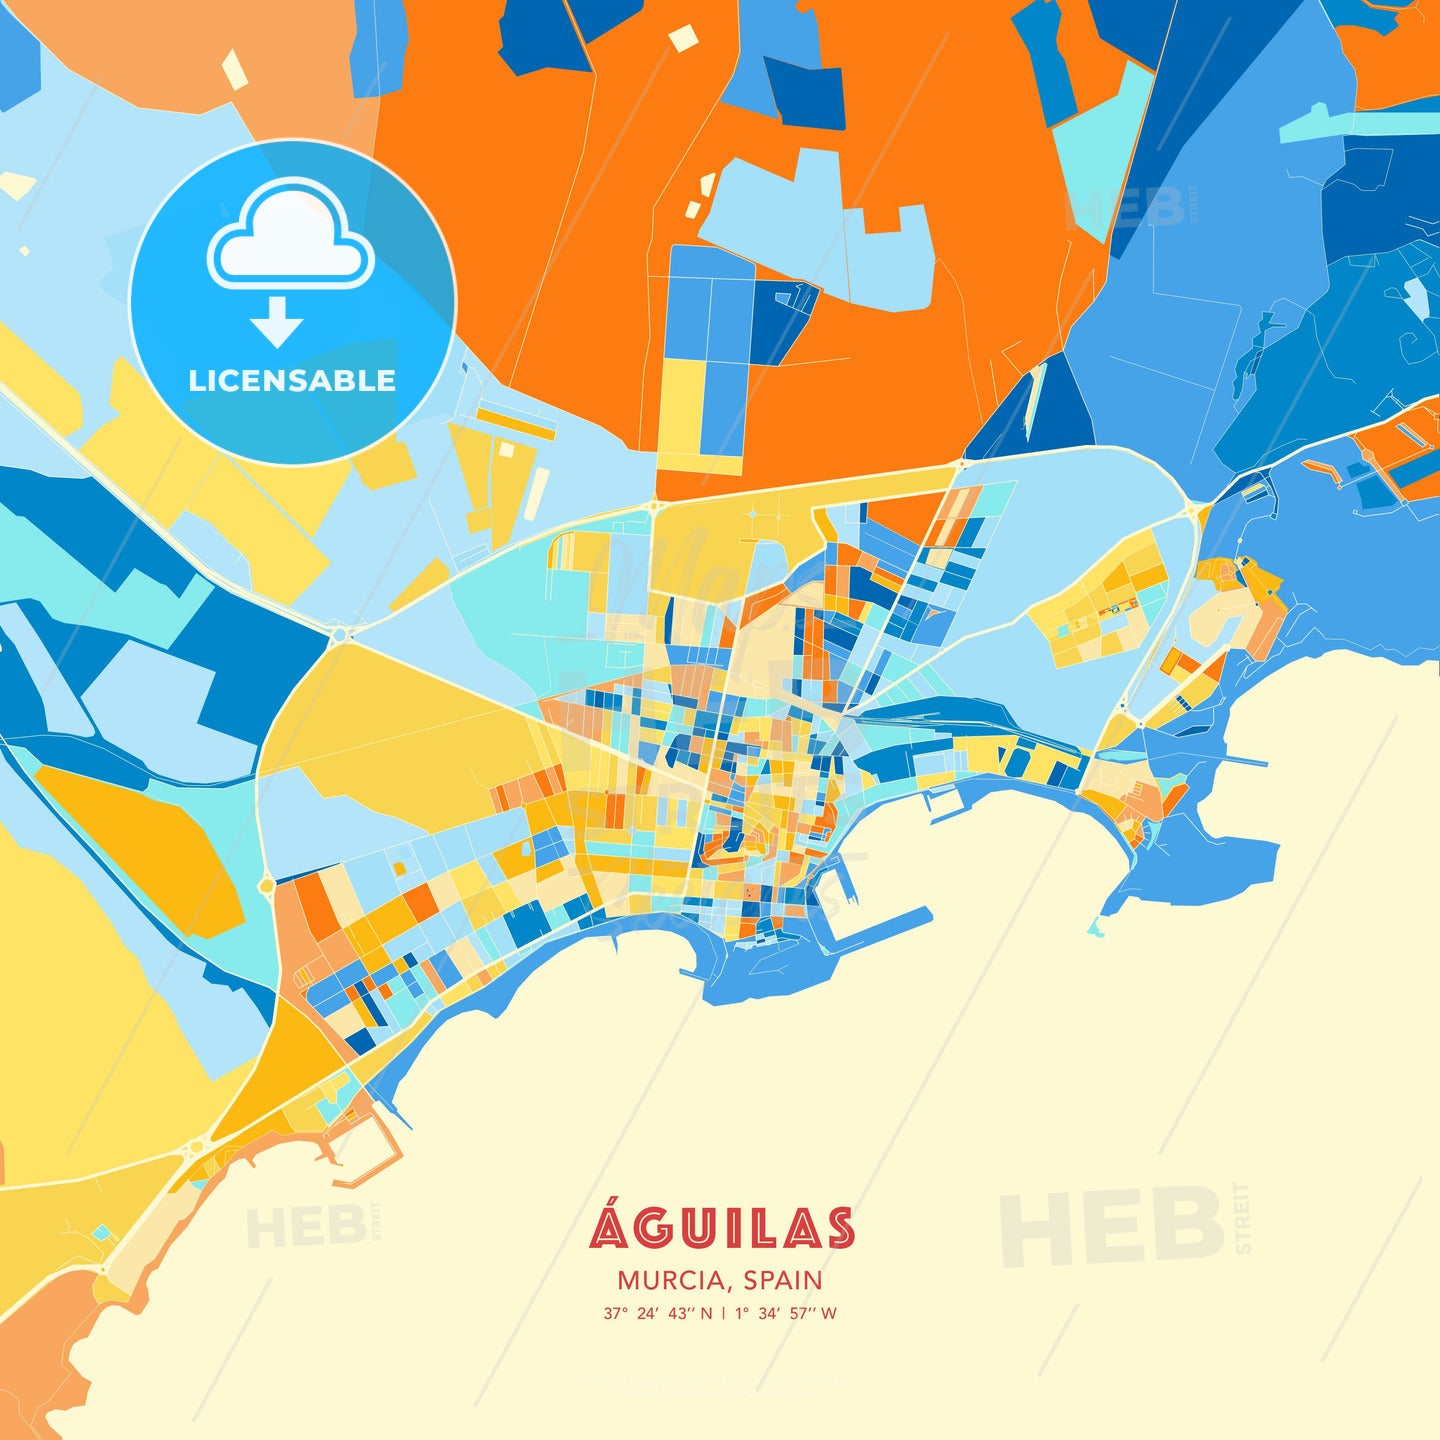 Águilas, Murcia, Spain, map - HEBSTREITS Sketches